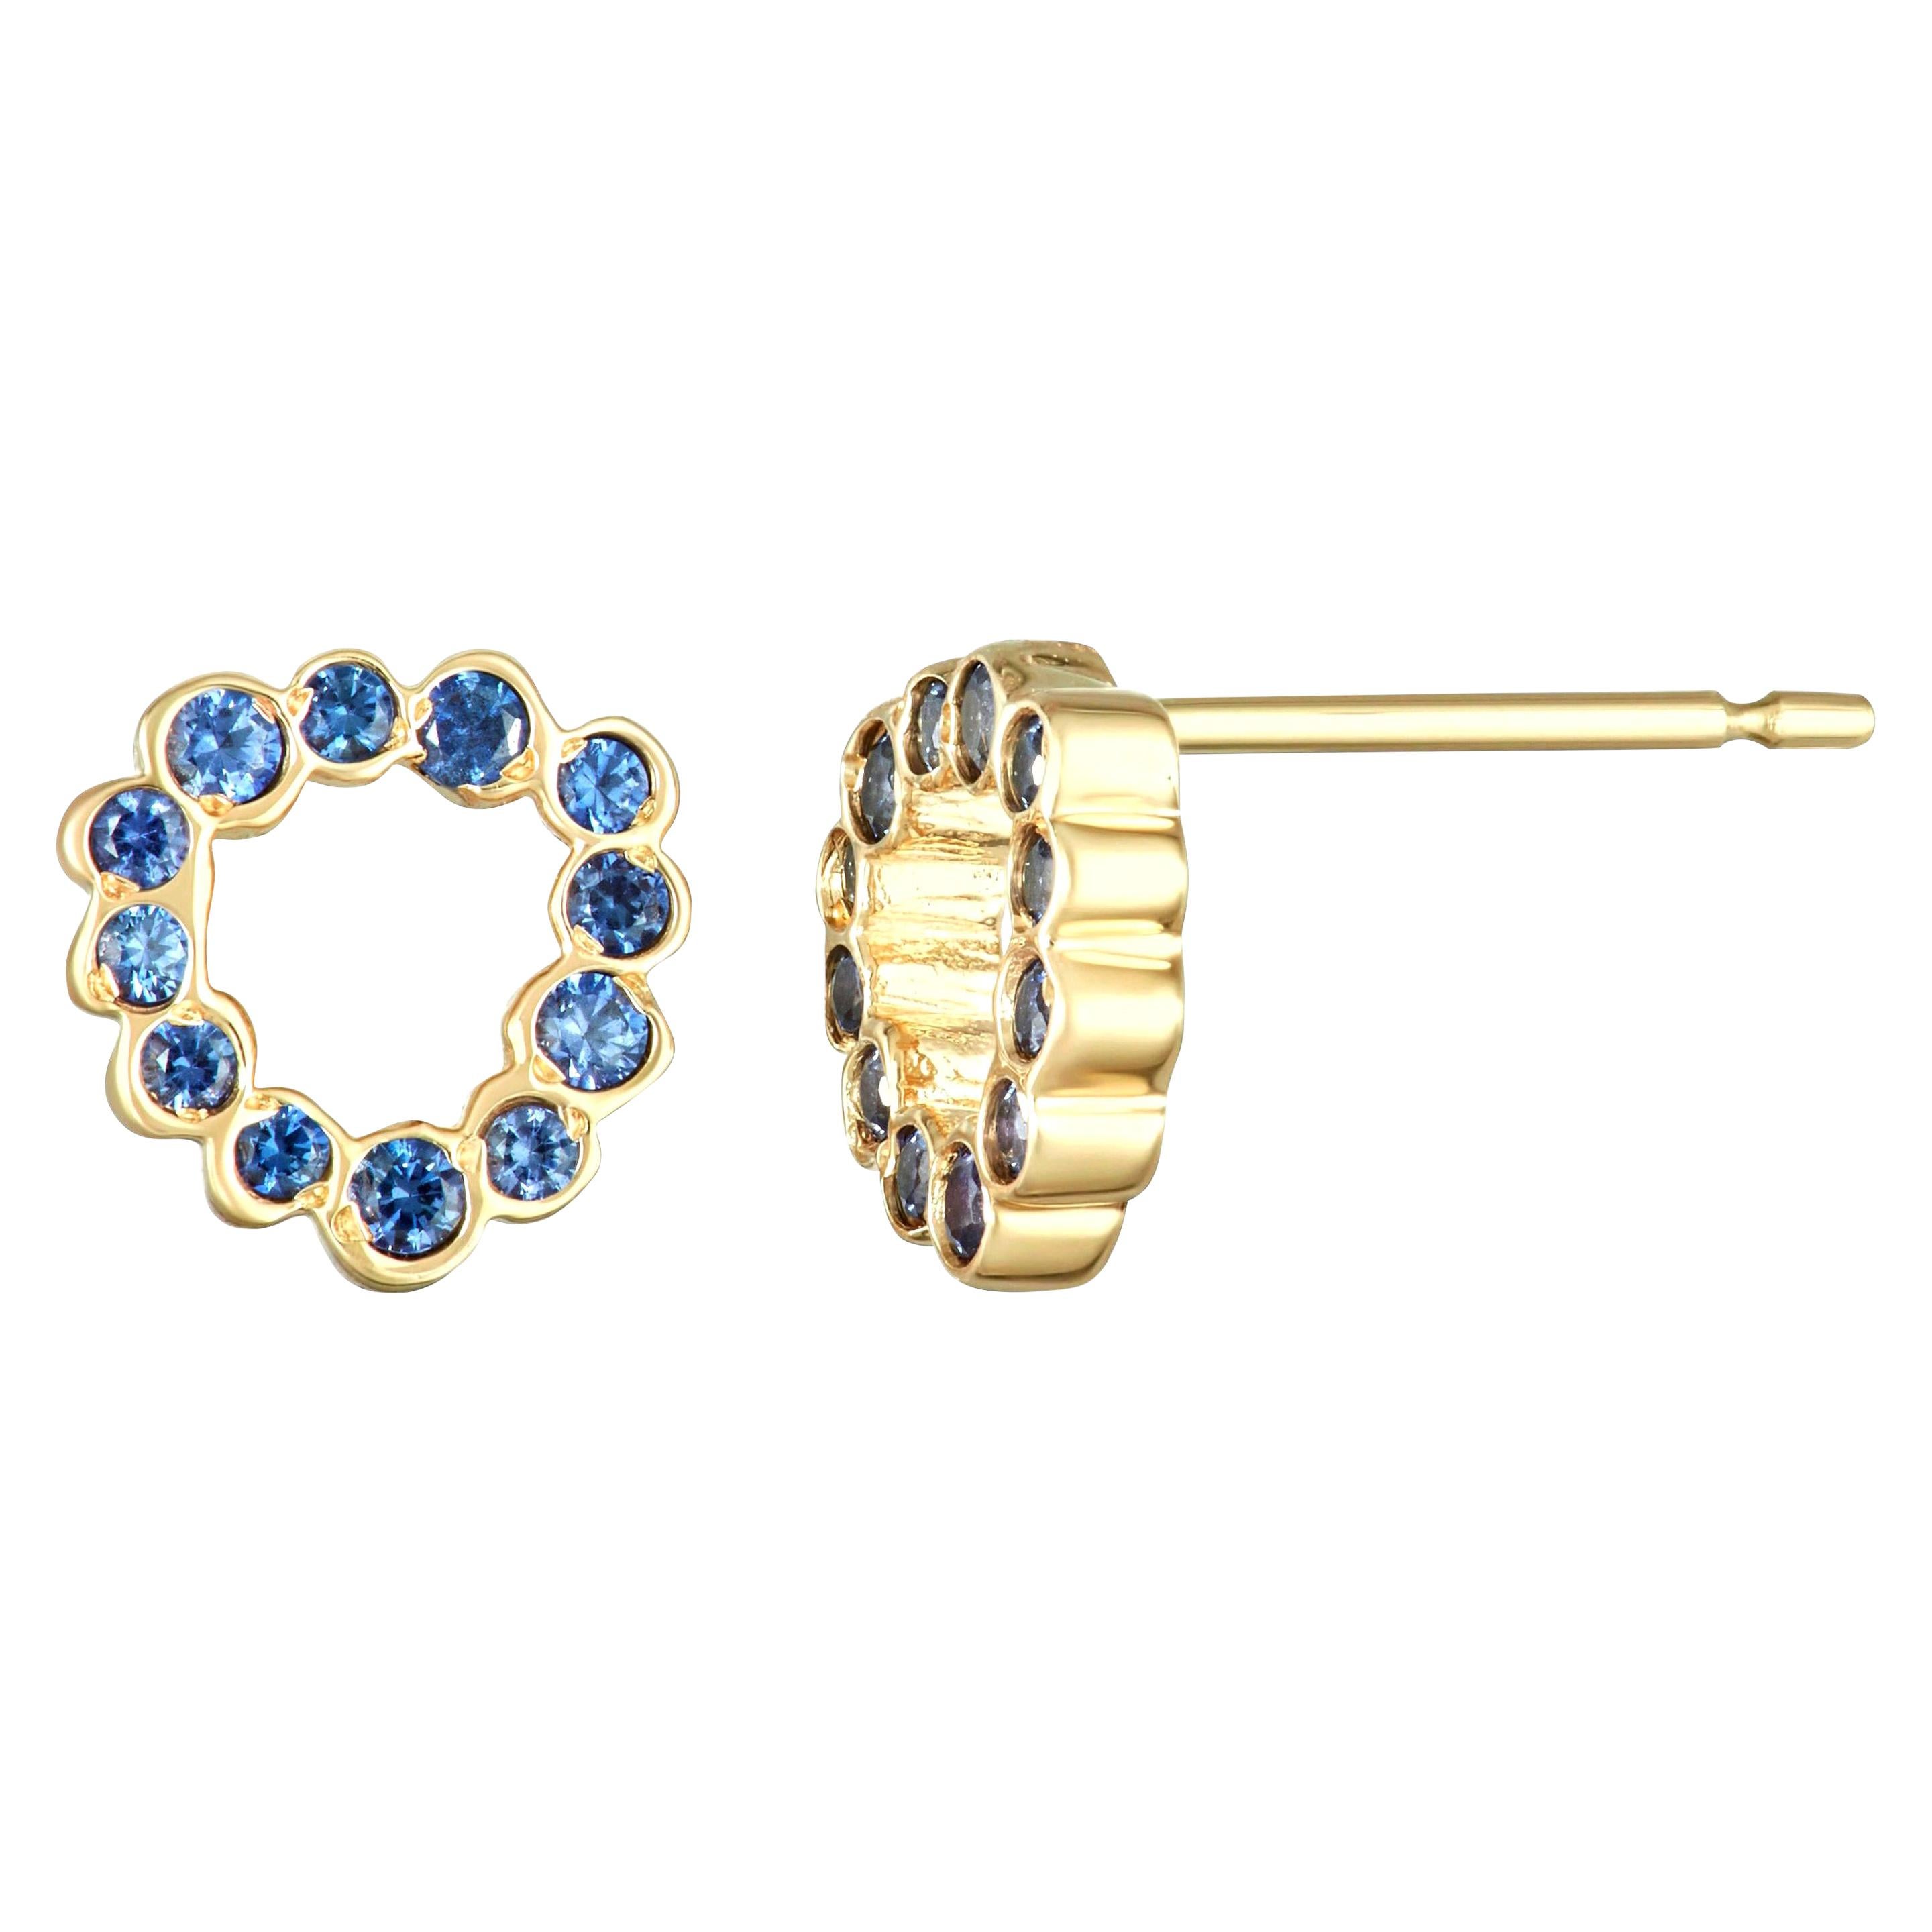 Boucles d'oreilles en or 14 carats avec un seul saphir bleu Hi June Parker 